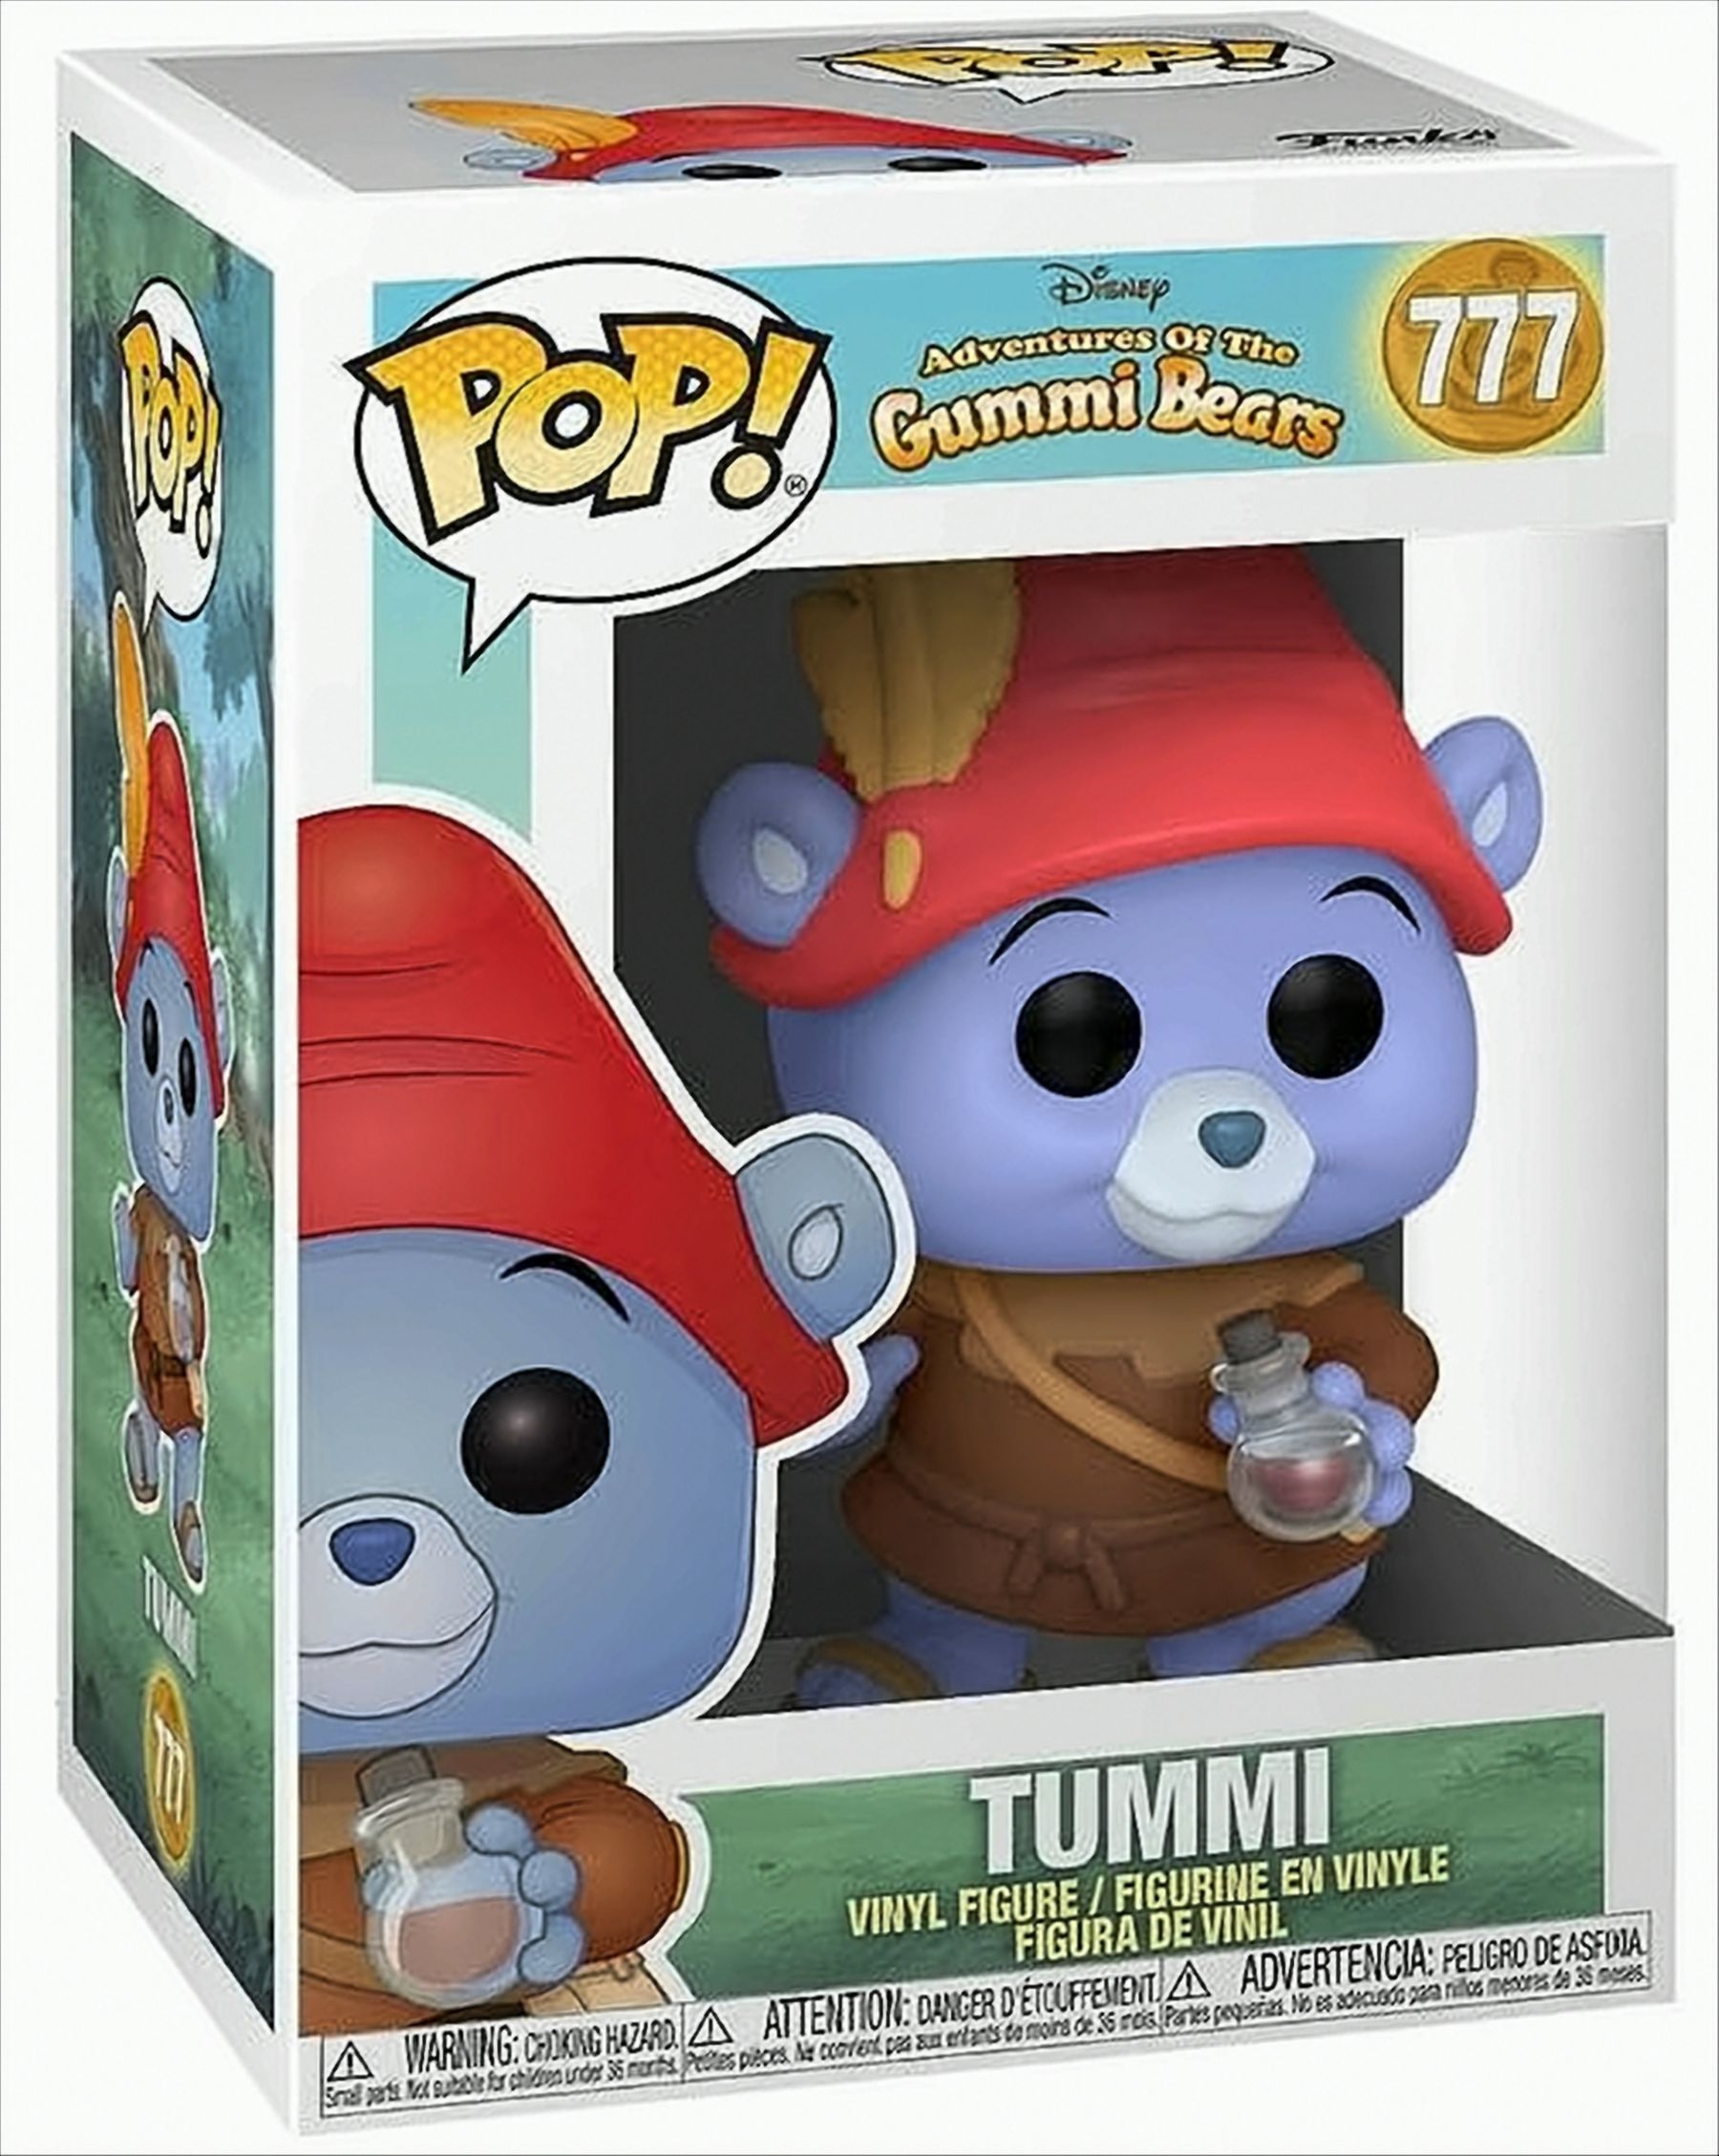 Funko POP! Disney Adventures of Gummi Bears Tummi von Funko LLC